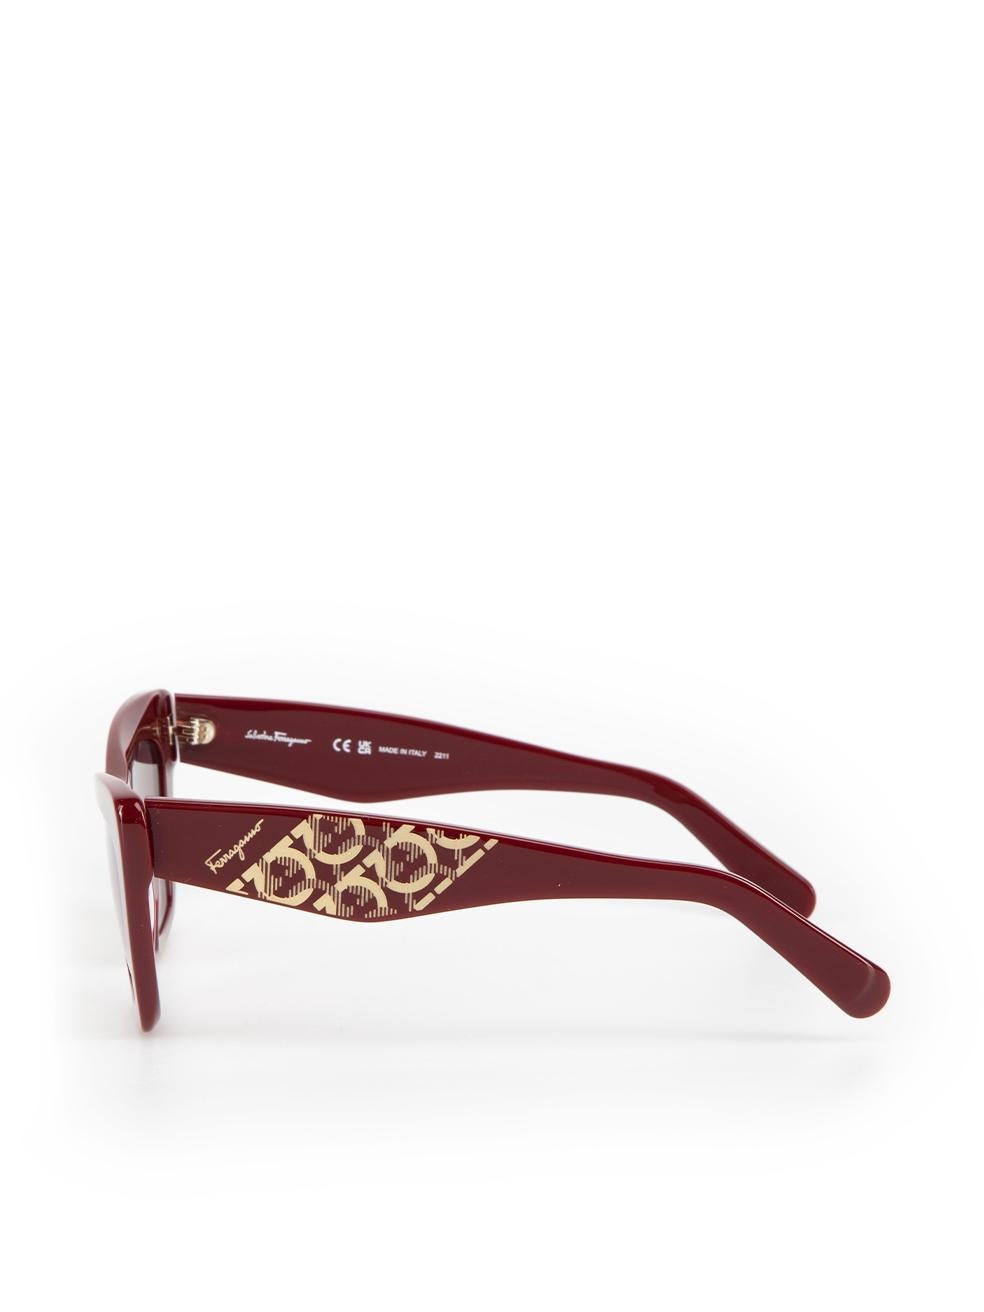 Salvatore Ferragamo Bordeaux Cat Eye Sunglasses For Sale 1